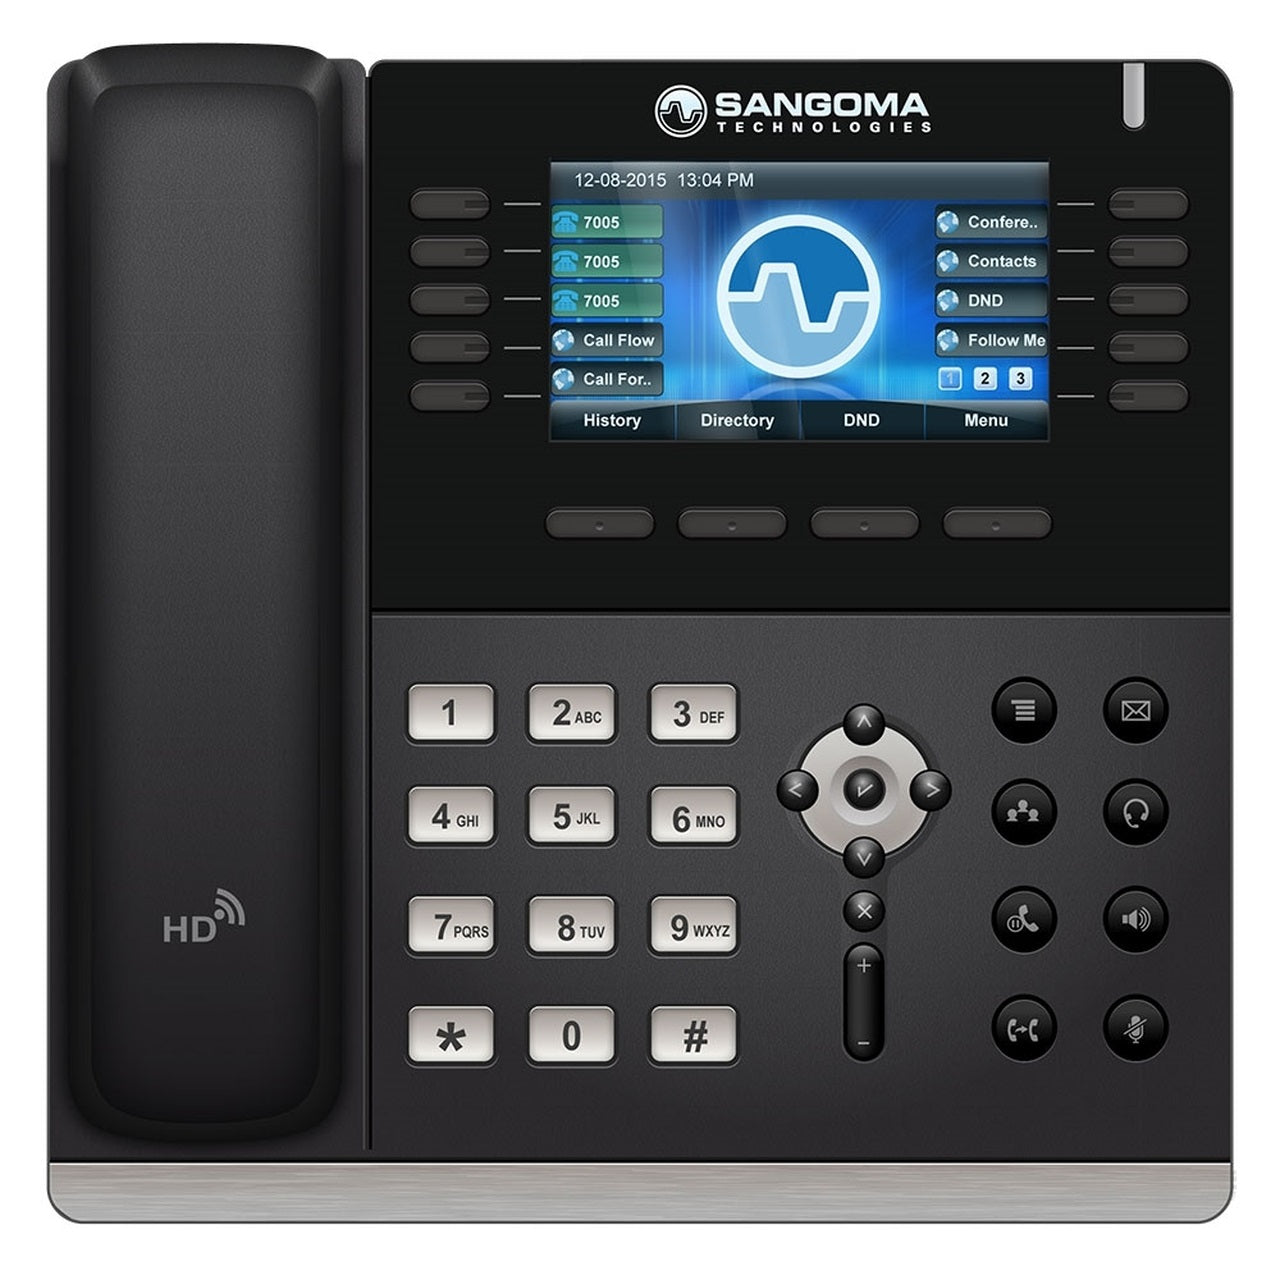 sangoma-s705-ip-phone-PHON-S705-front